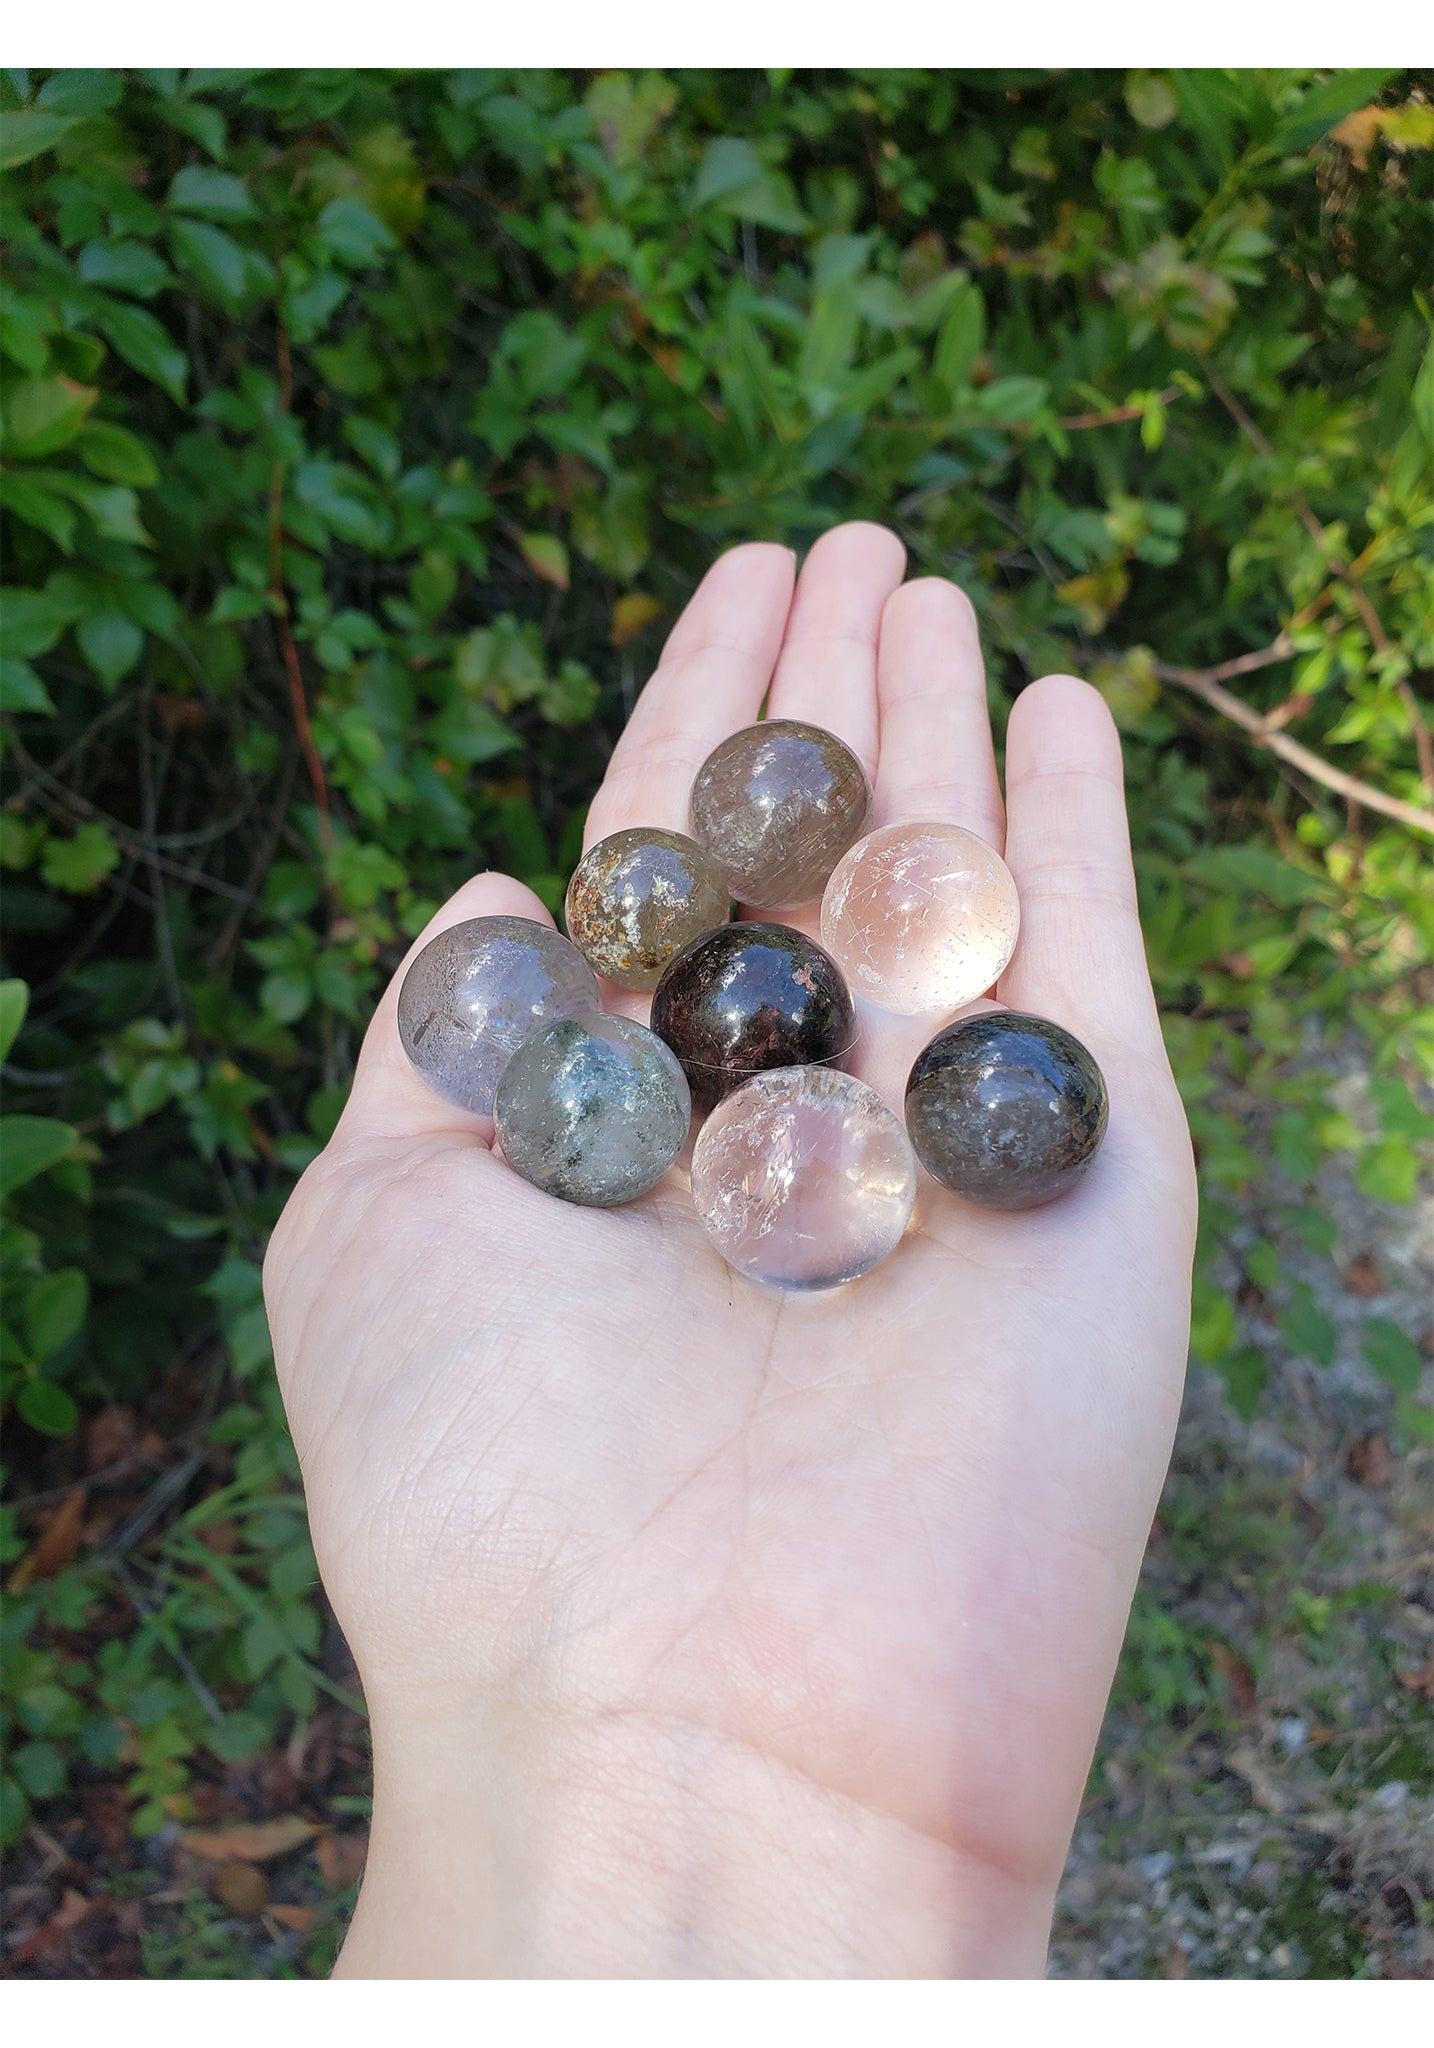 Rutile &amp; Included Quartz Lodolite Gemstone Sphere Orb Marble - Multiple Sizes!